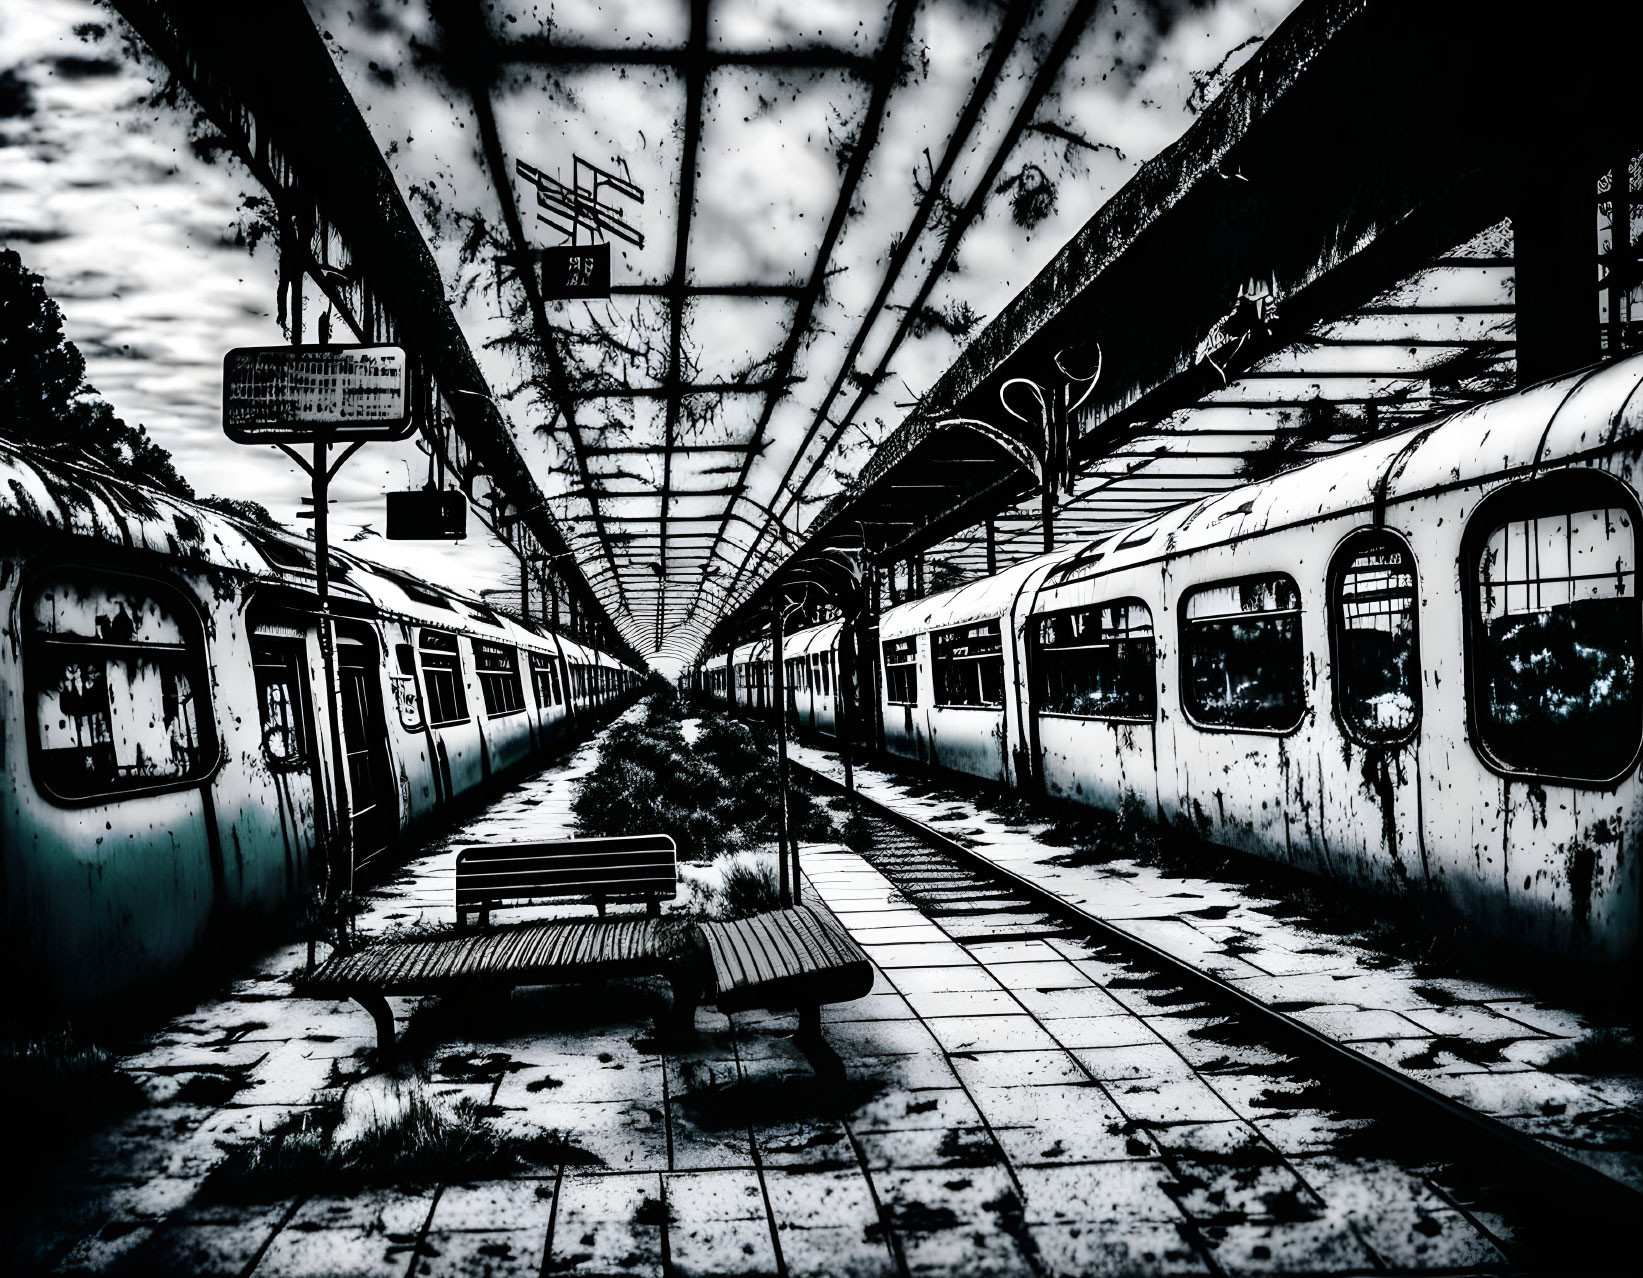 futur station © Gerald B.